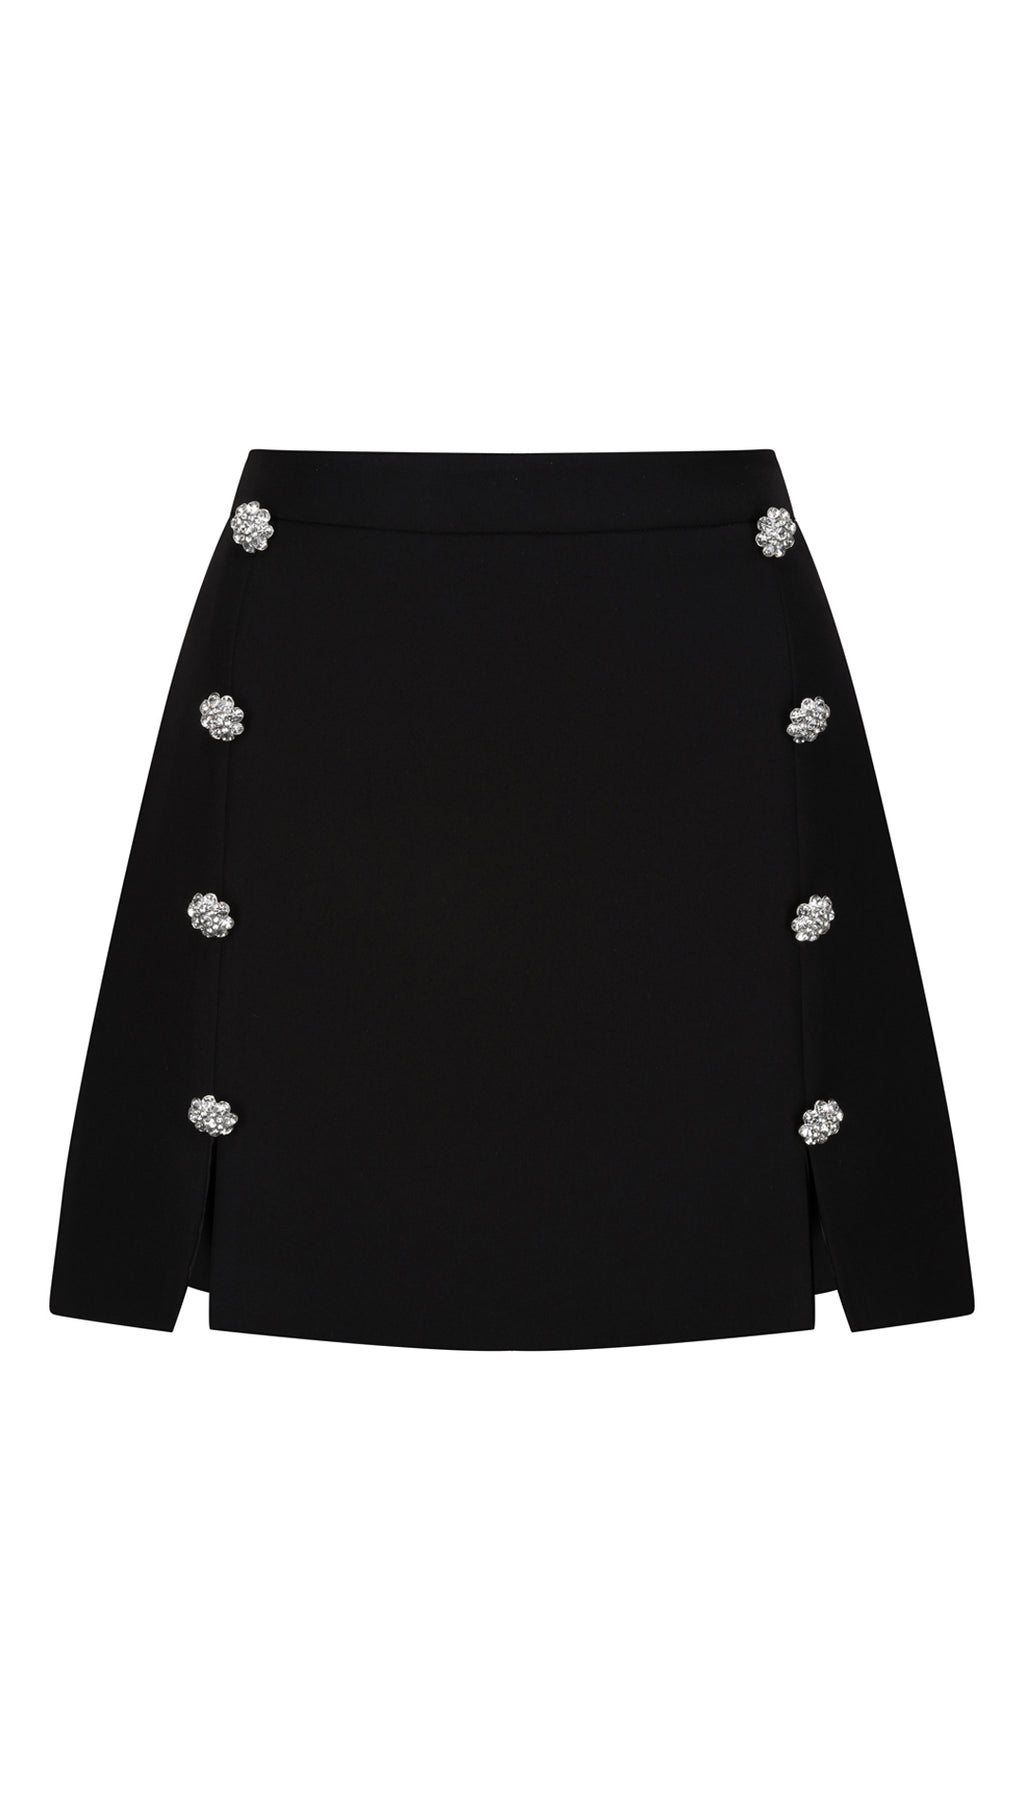 Amaya Black and Crystal Skirt